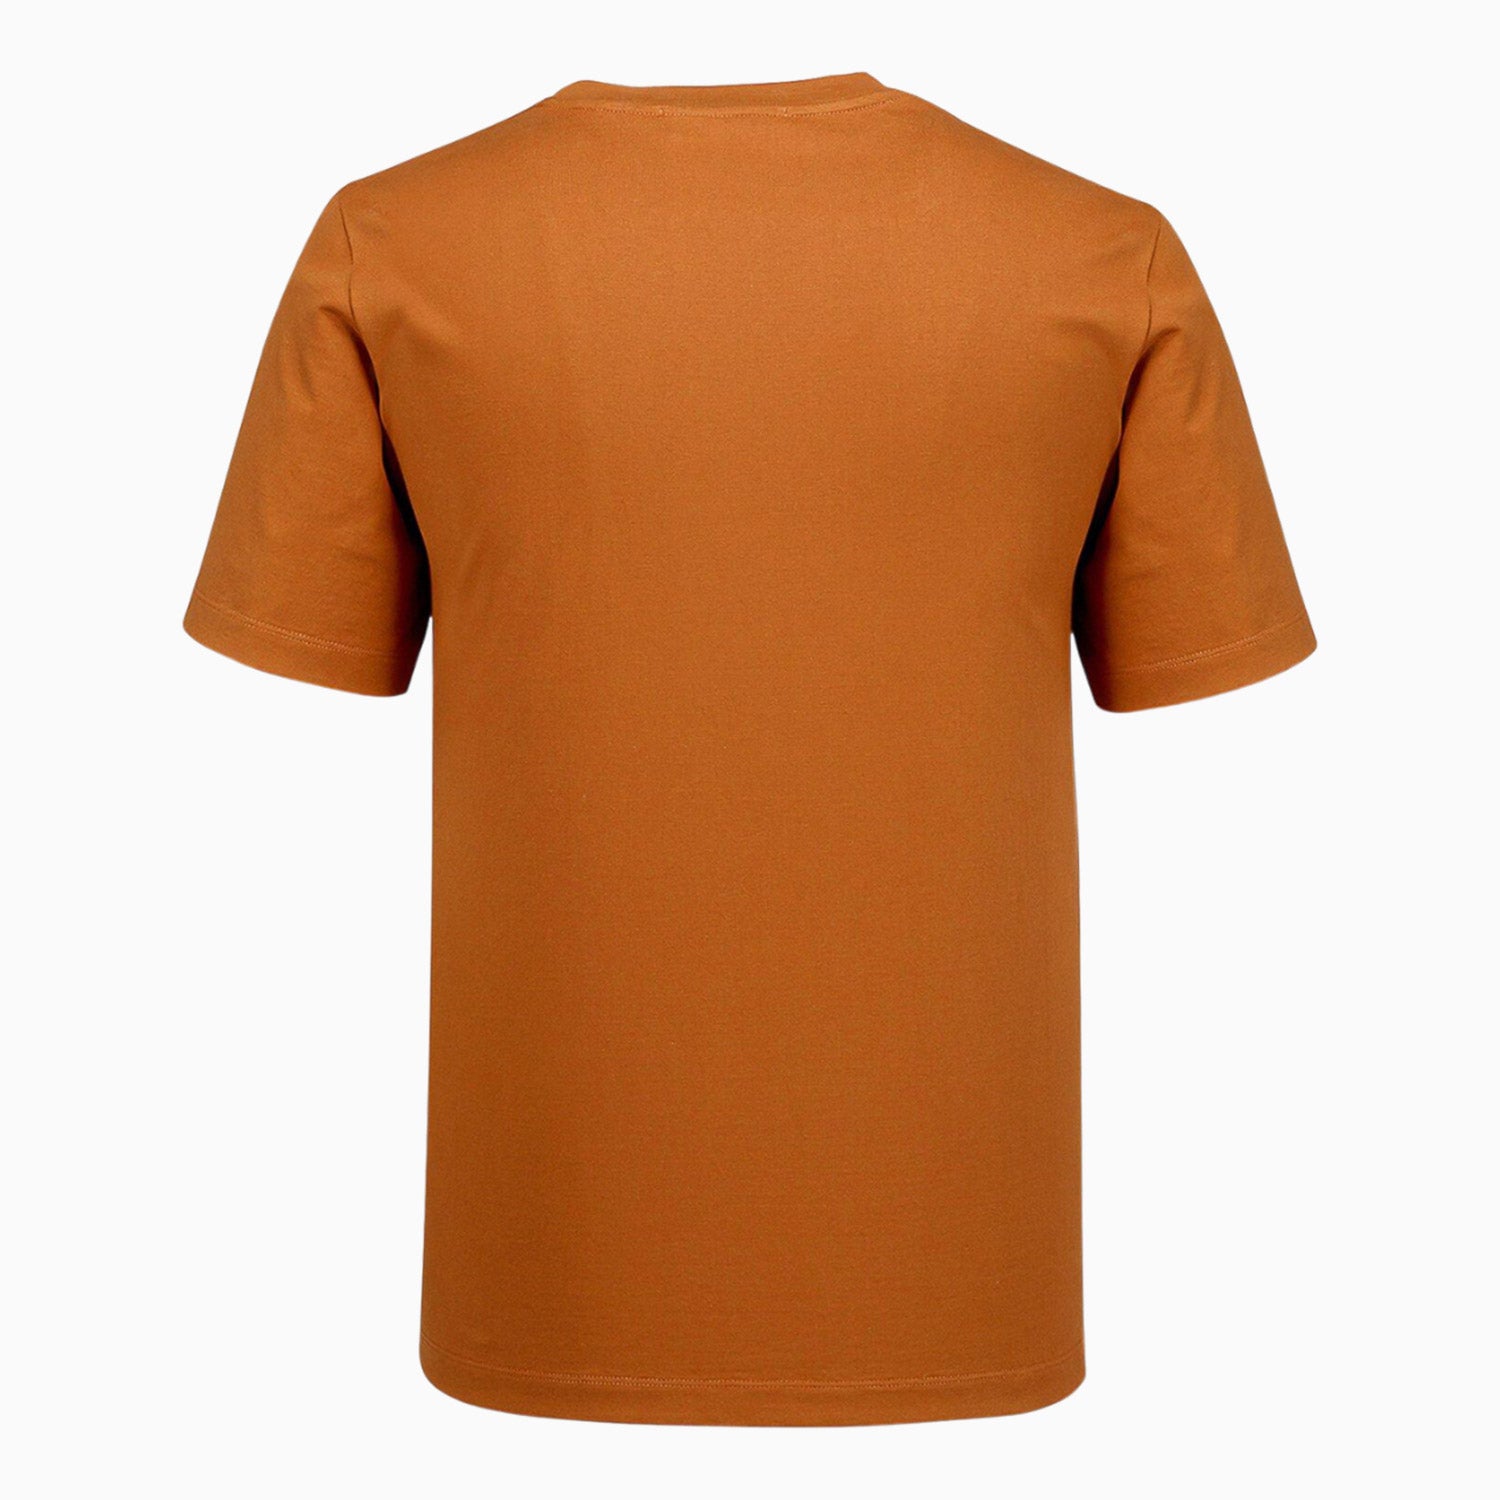 mcm-men-s-classic-logo-t-shirt-in-organic-cotton-mhtbsmm09n4